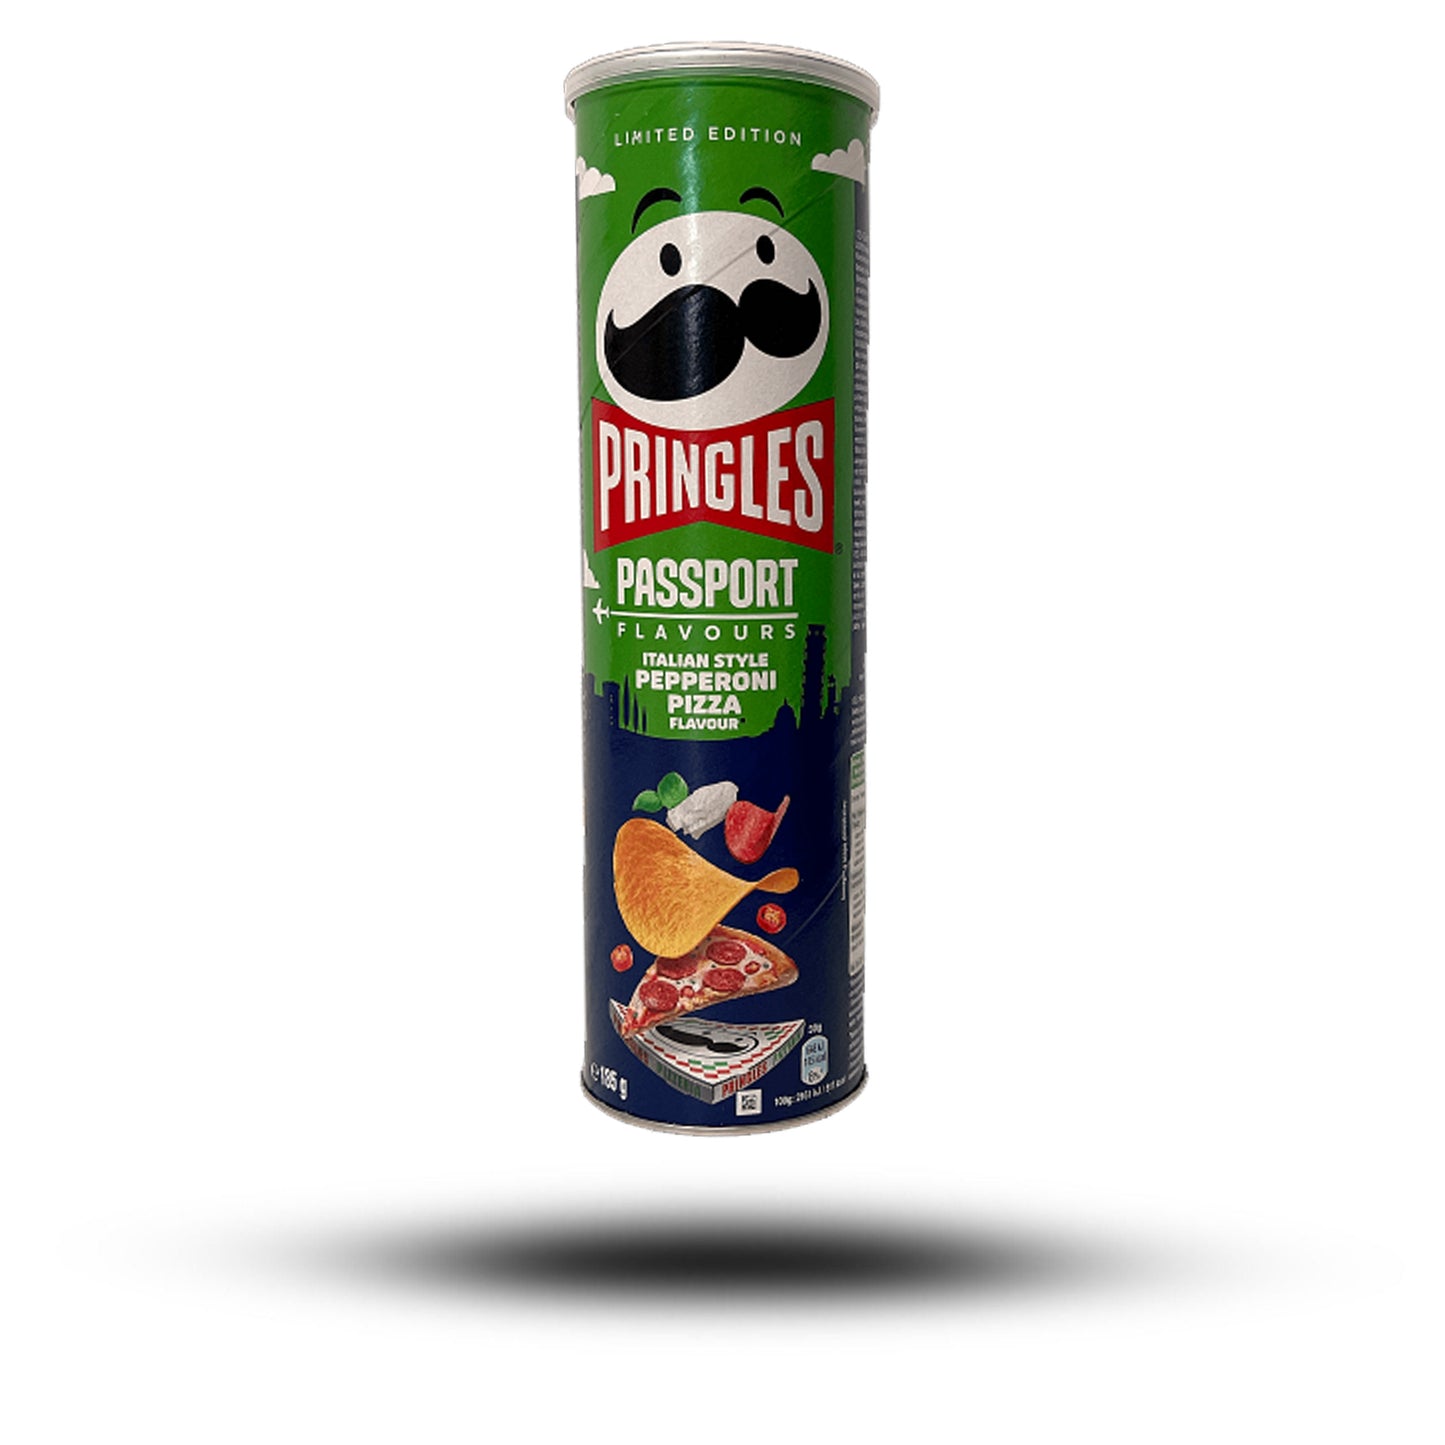 Pringles Passport Flavours Pepperoni Pizza 185g